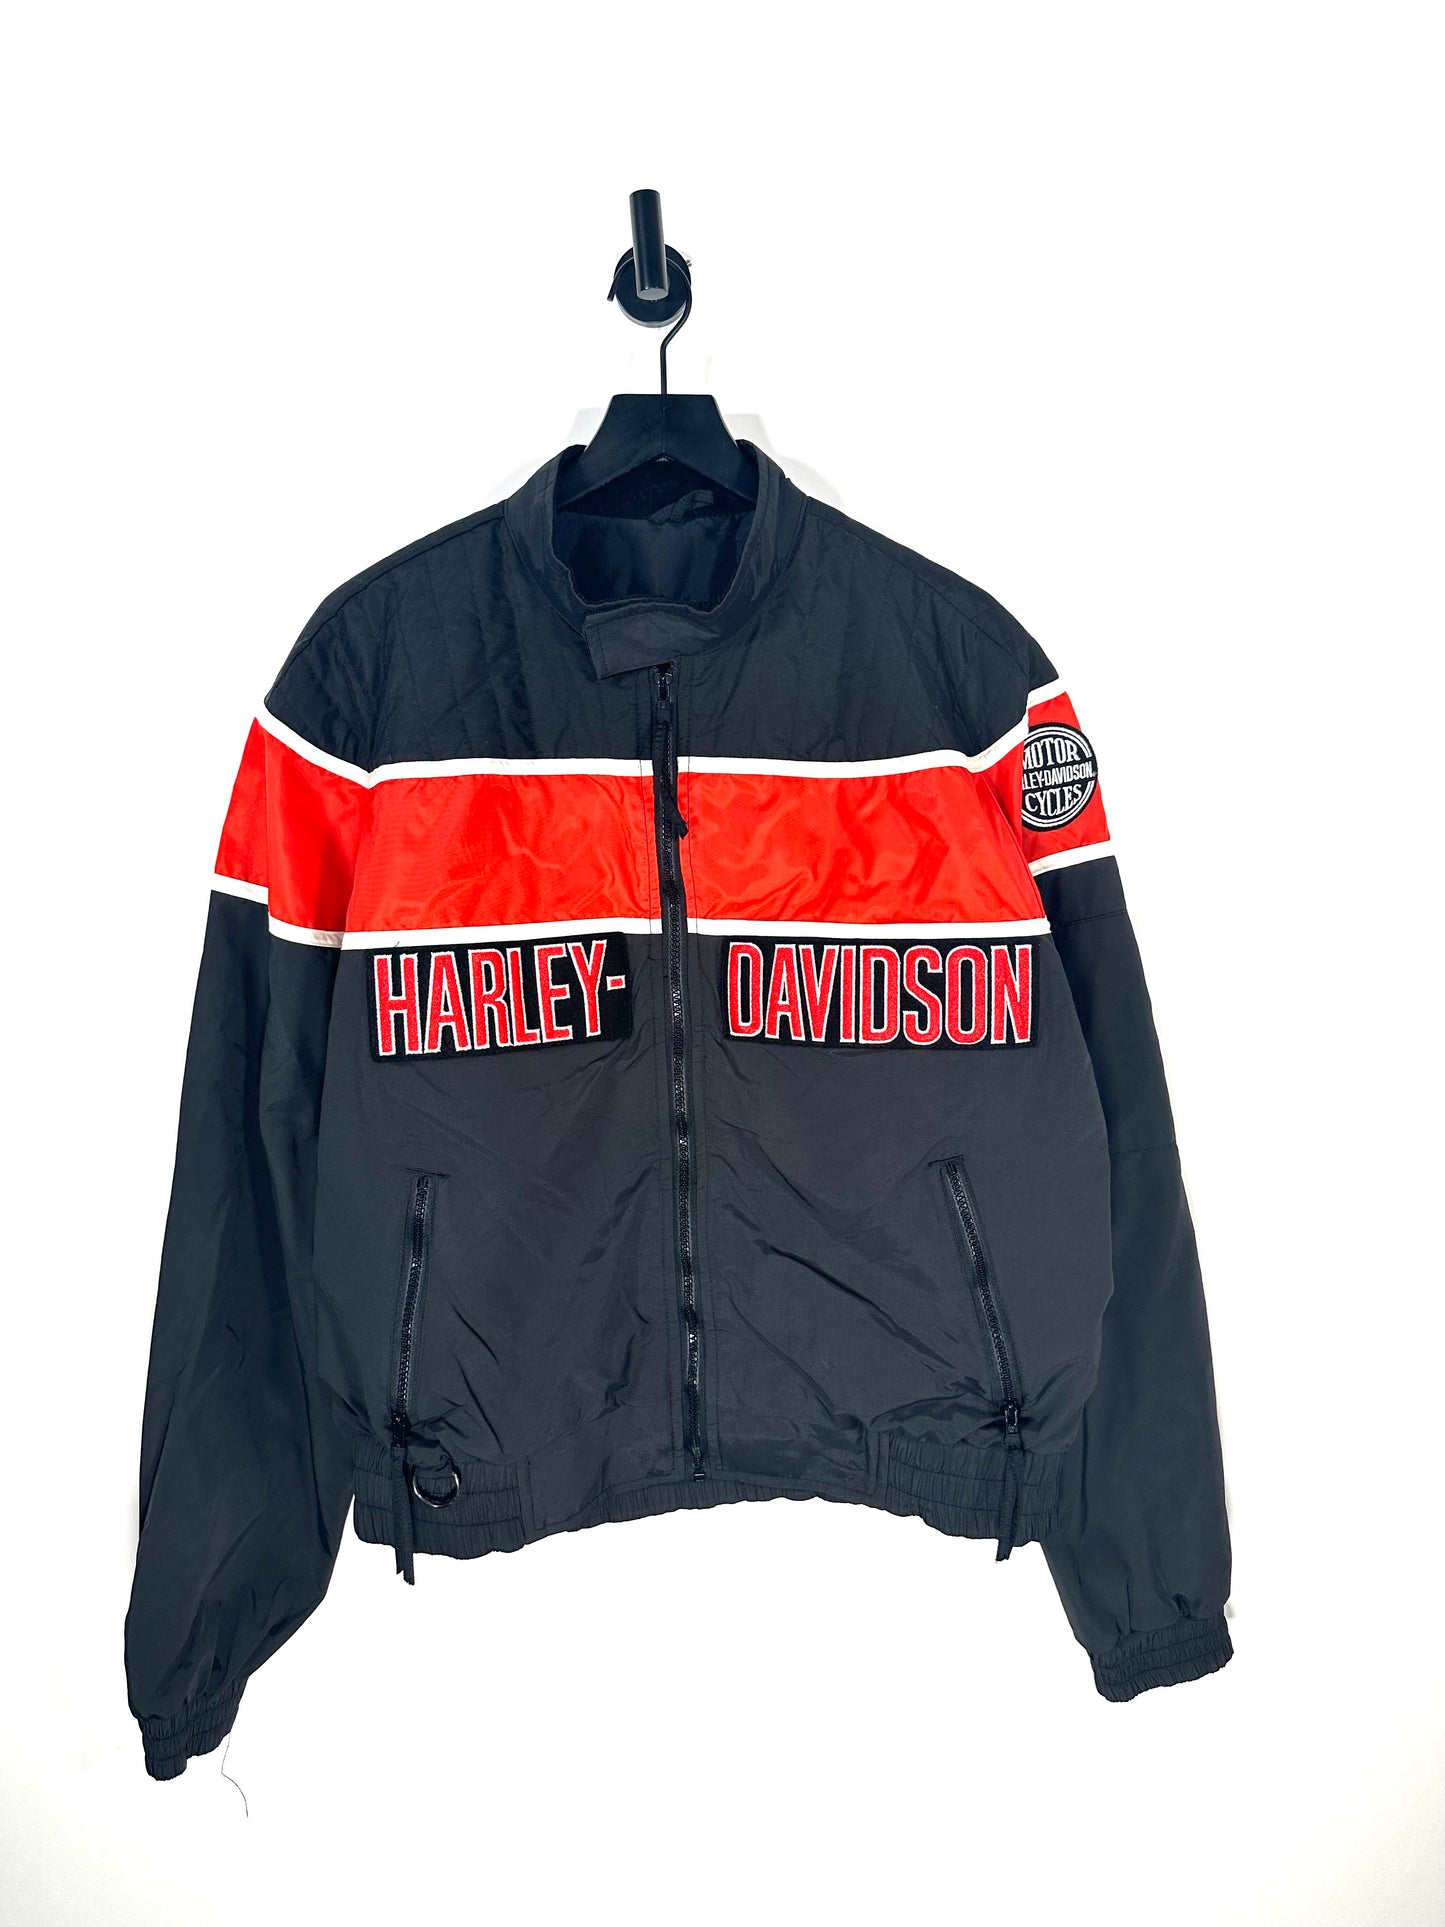 Harley Davidson Racing Jacket - XL